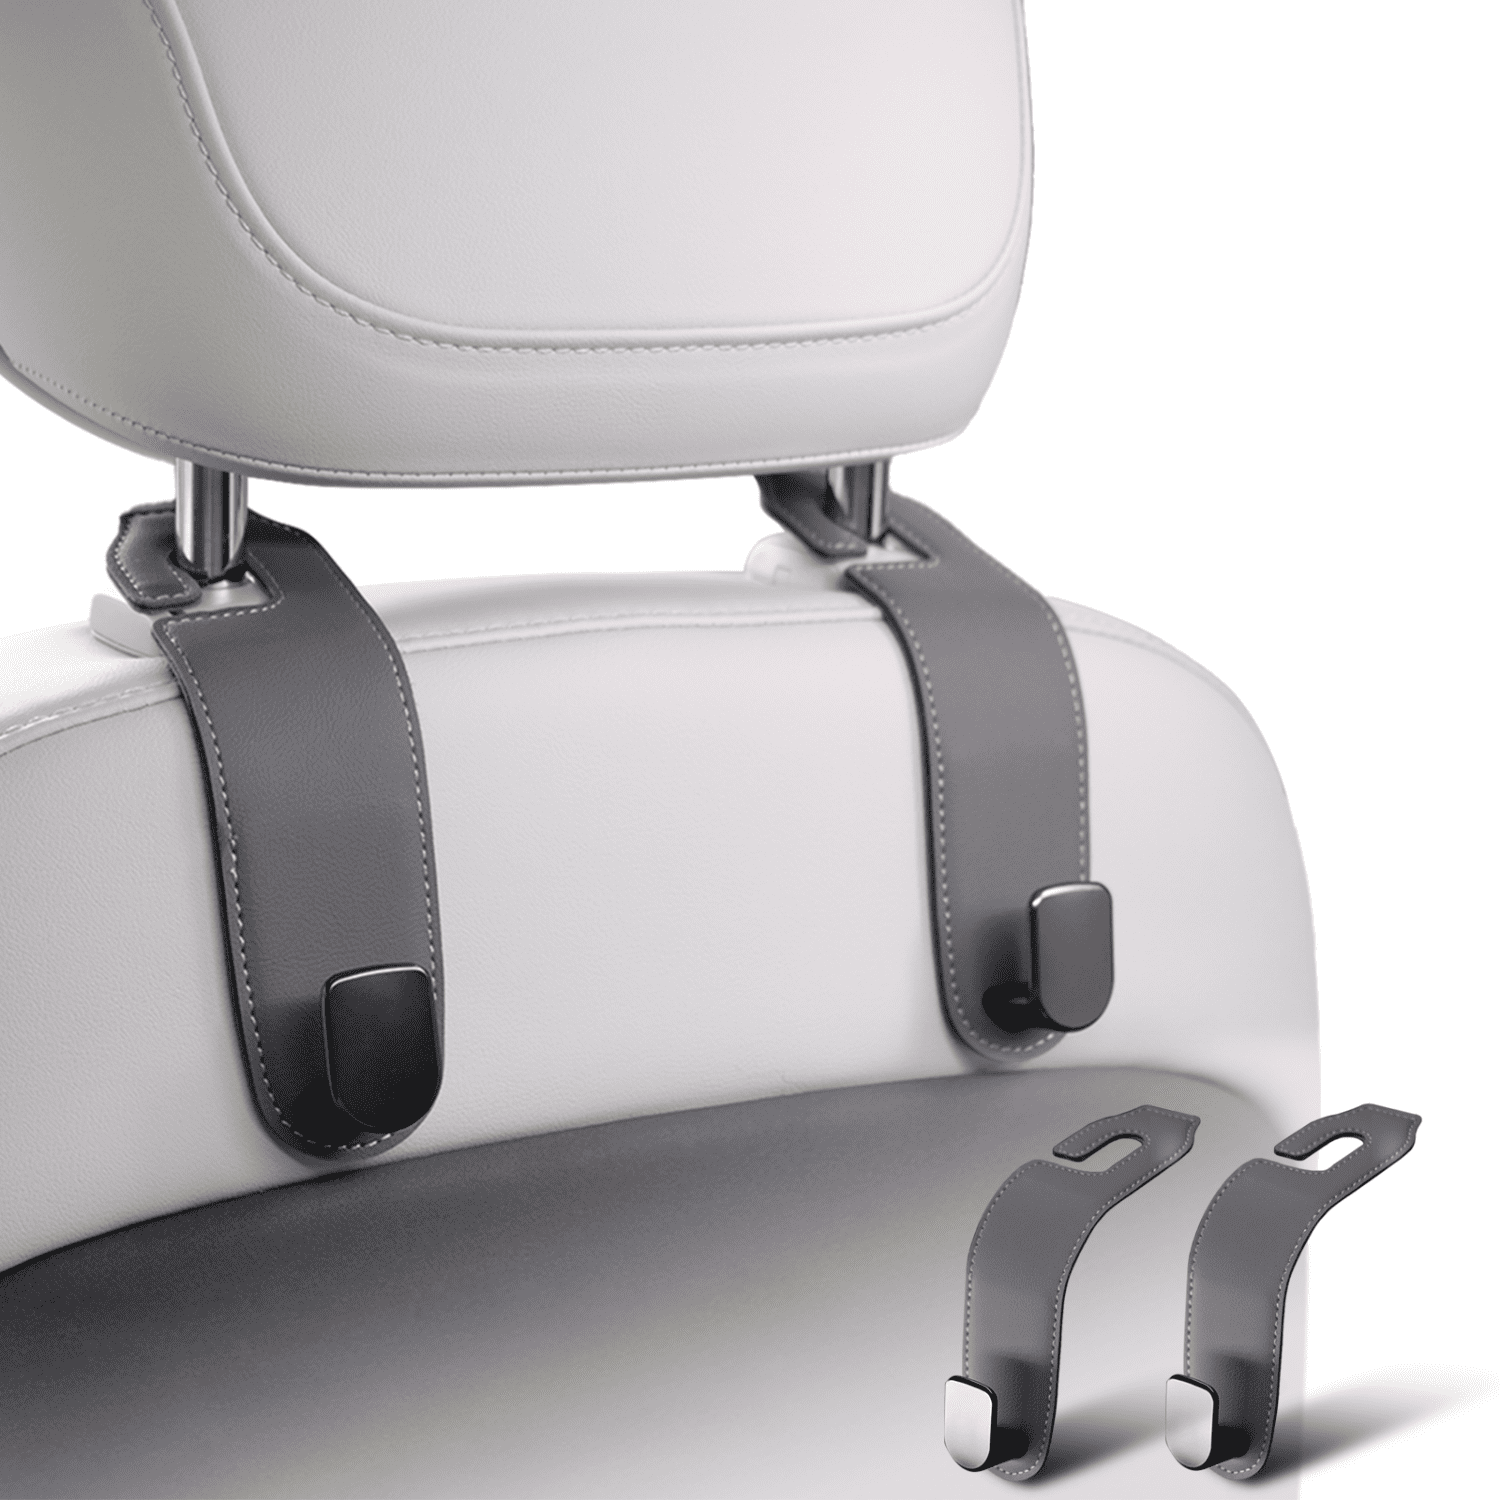 Magic Car Headrest Hooks, Car Seat Organizer Purse Headrest Hook Holder  Behind Seat Hook for Hanging Purse or Bags, Black, 2 Pack